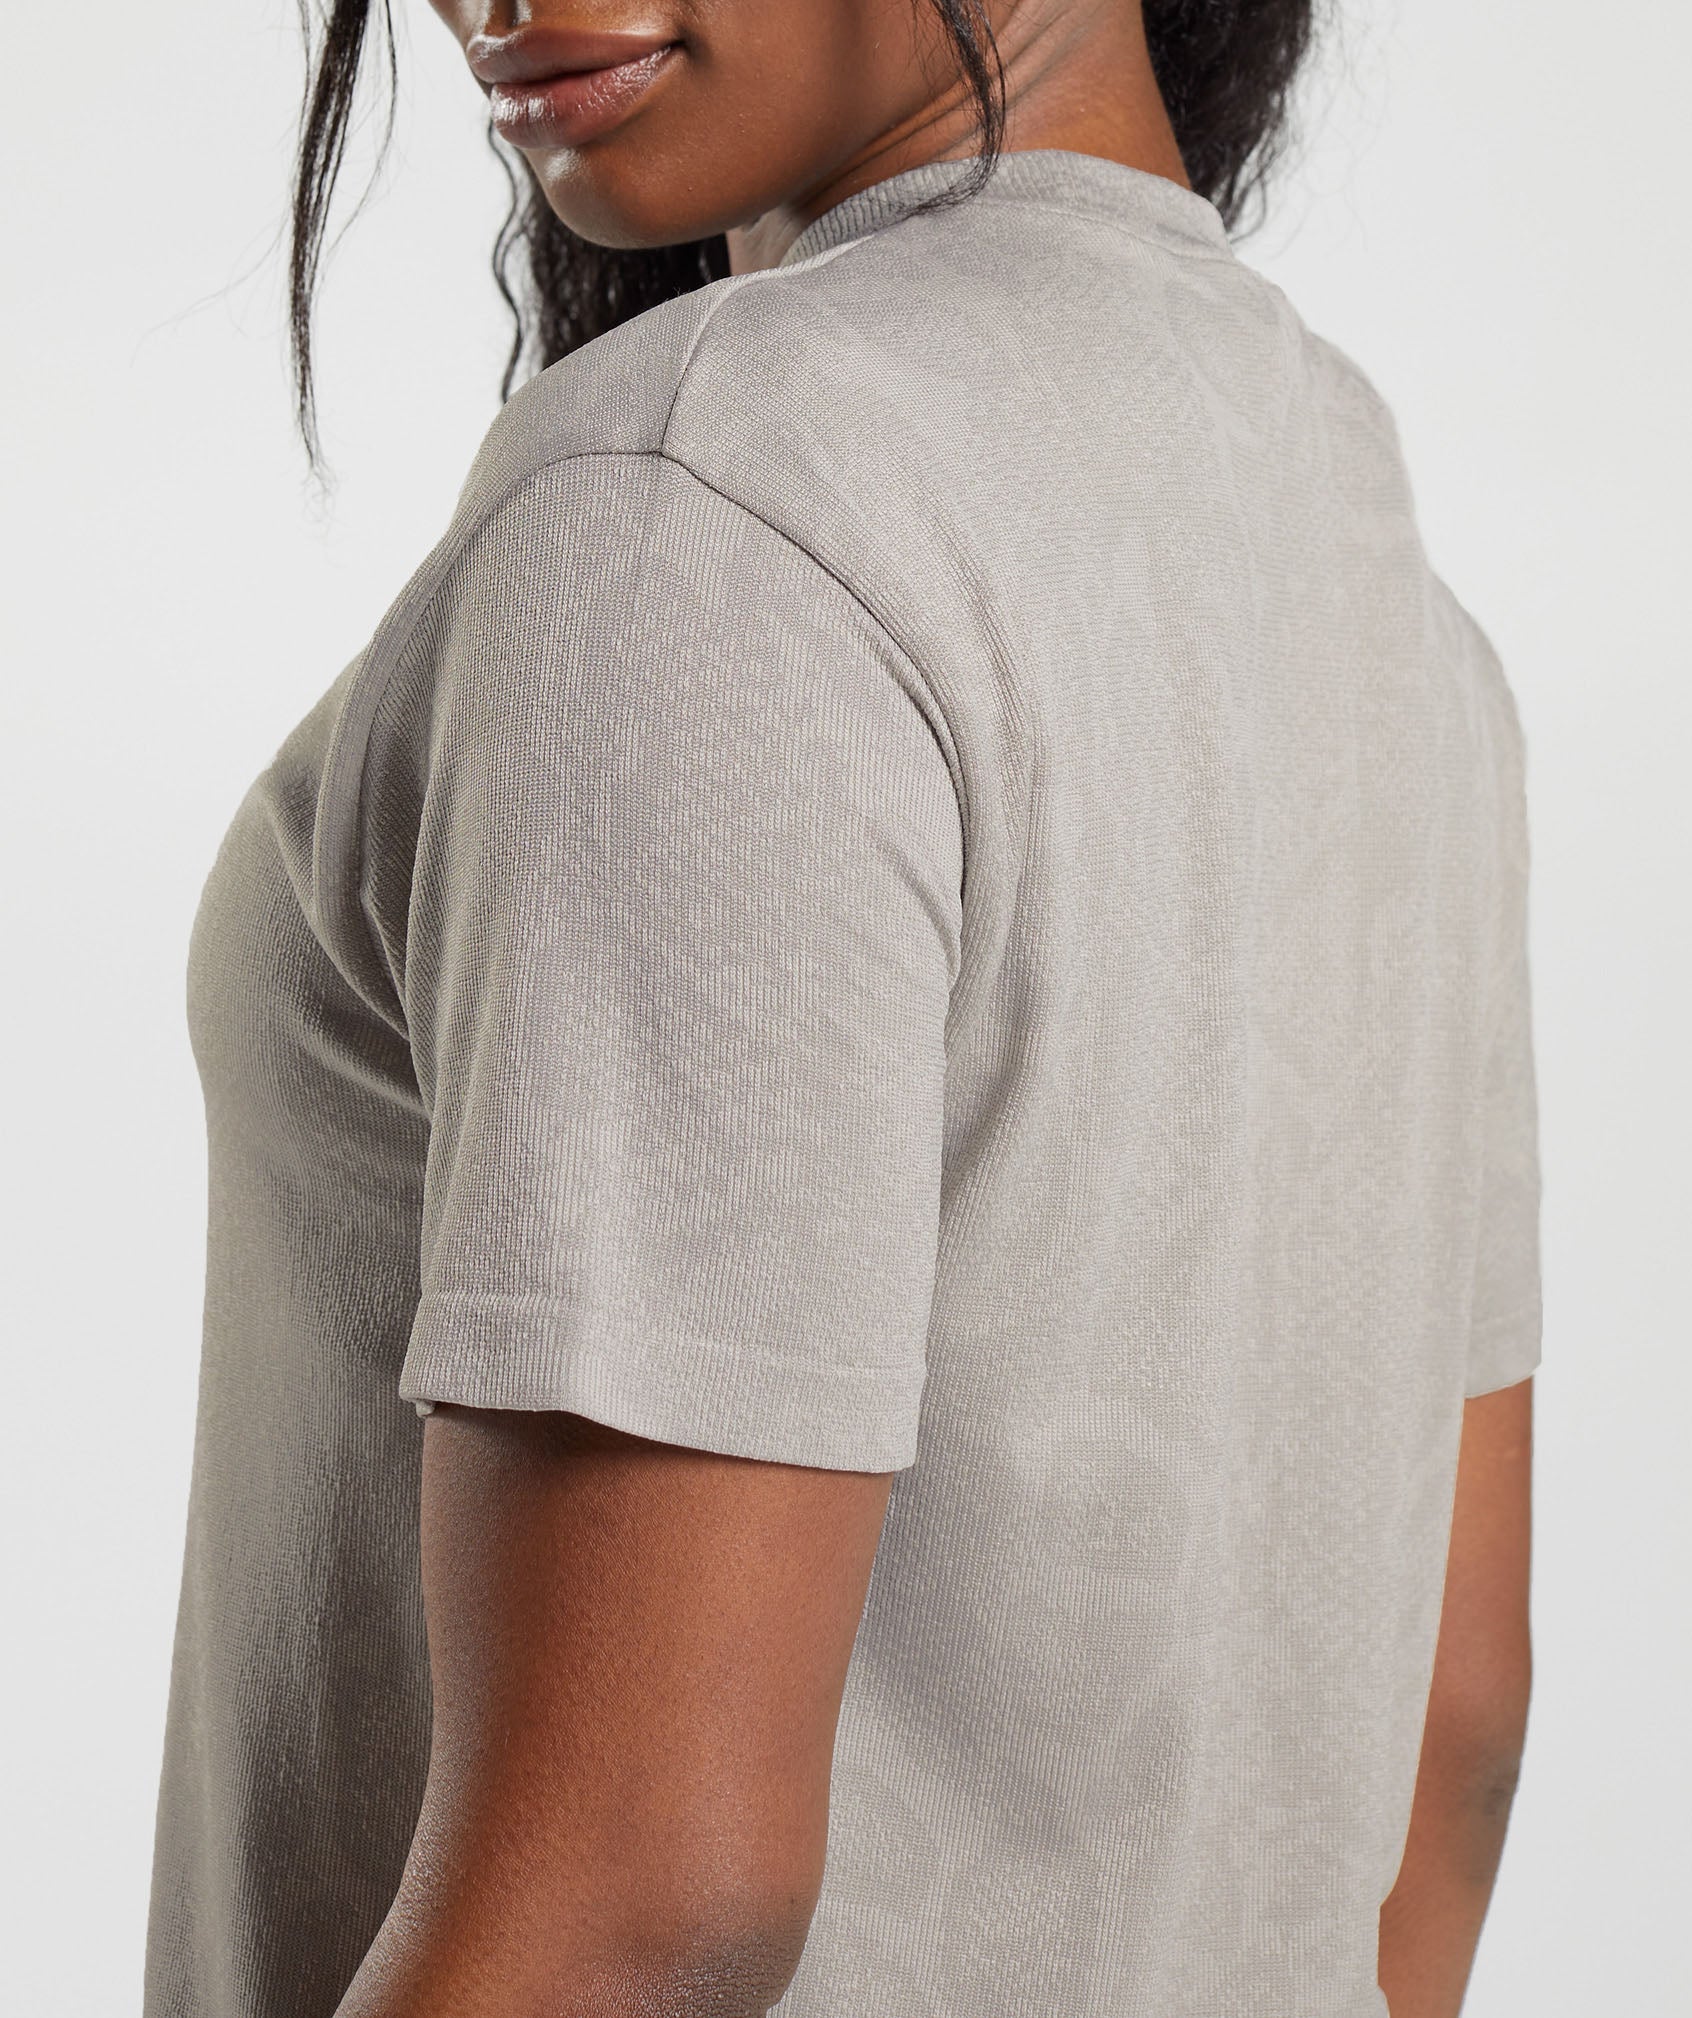 Adapt Animal Seamless T-Shirt in Mushroom Brown/Urban Grey